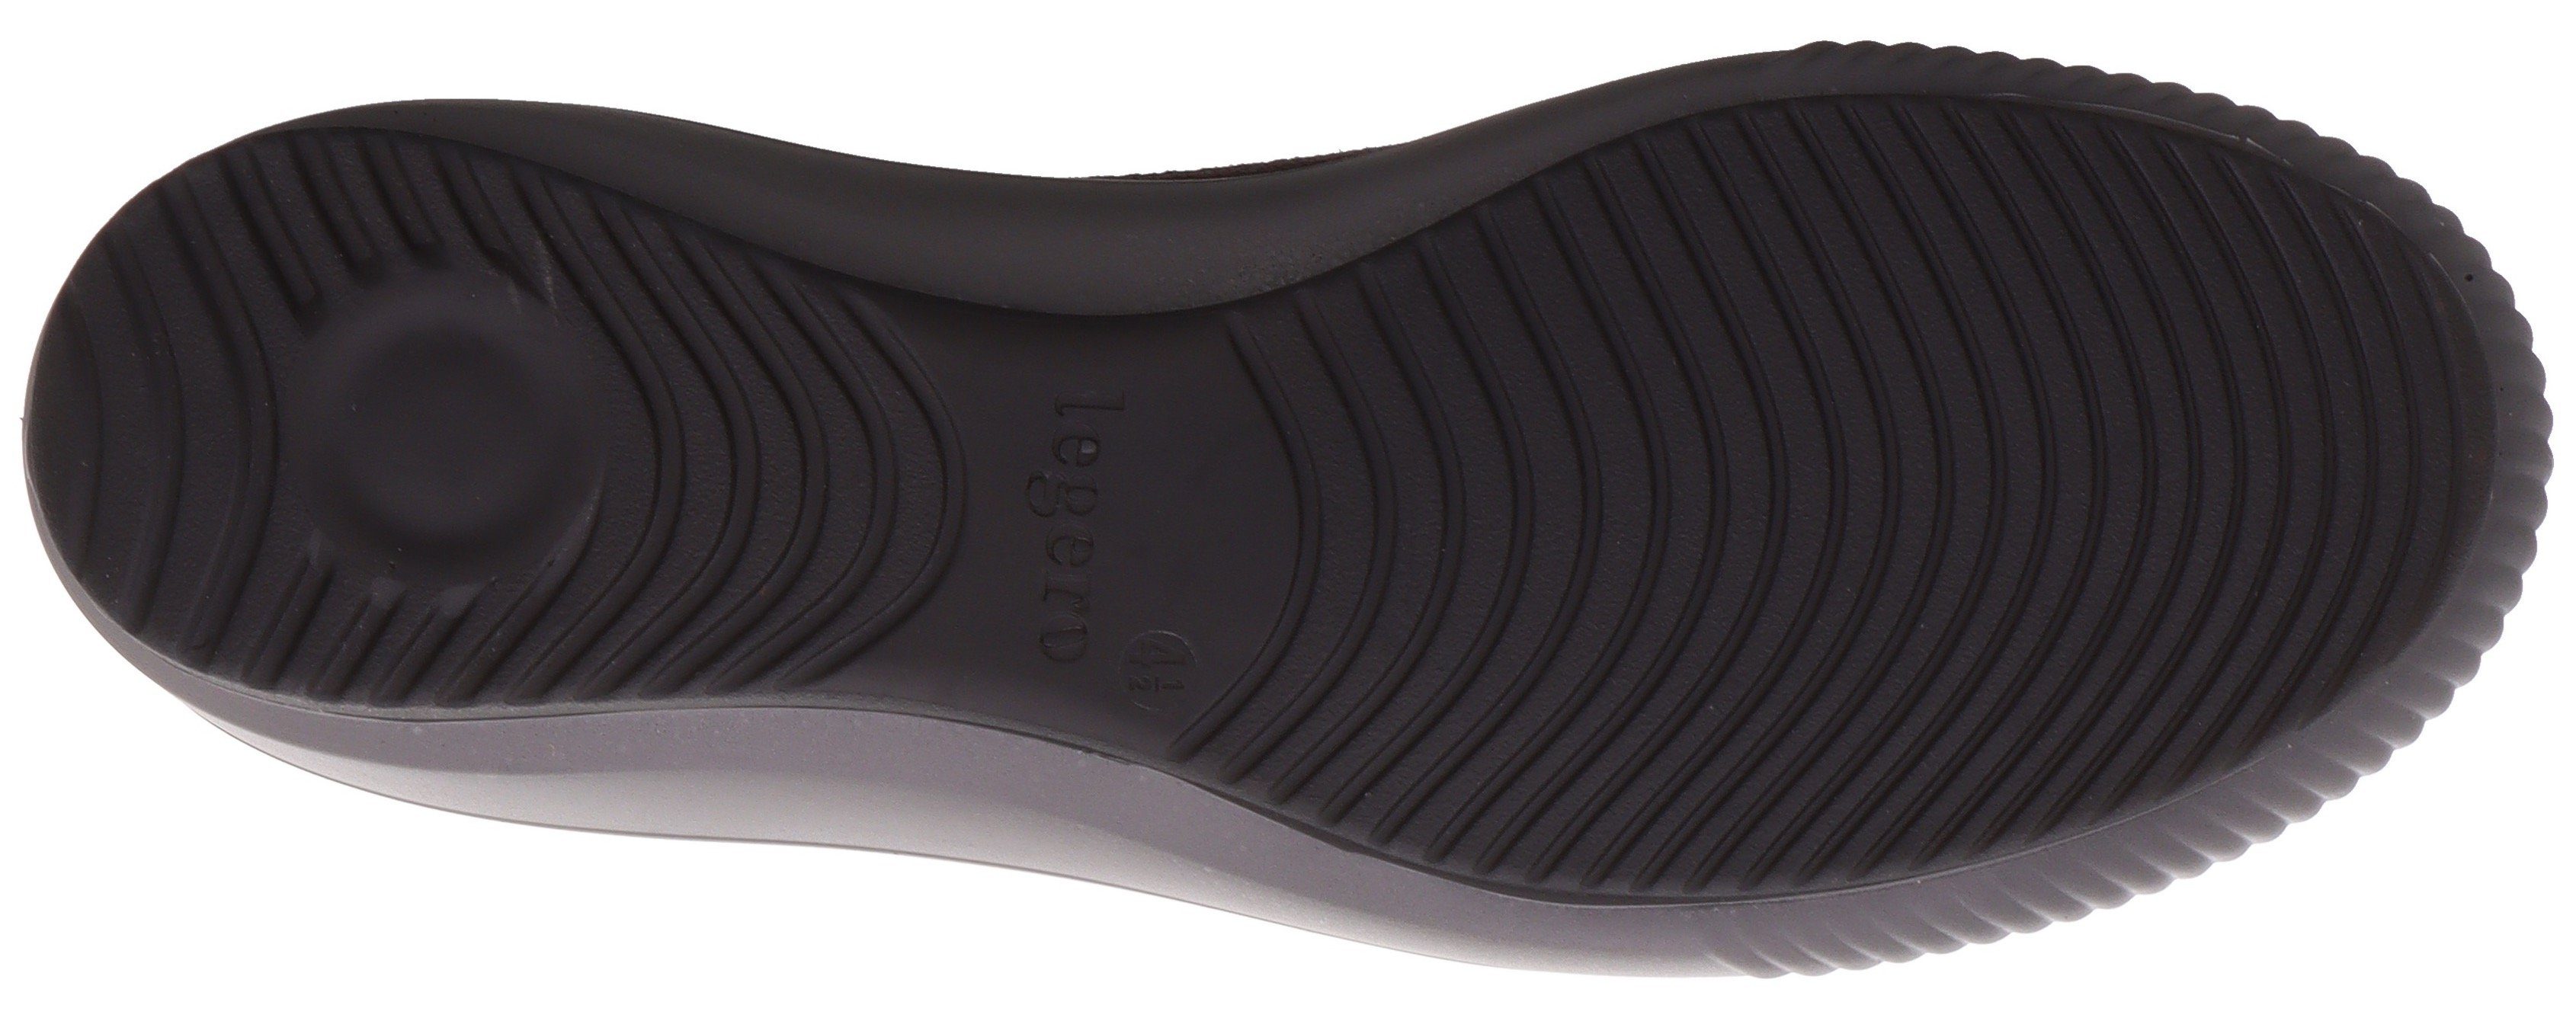 Legero Schaftabschluss softem 5.0 Tanaro mit lavagna (grau) Sneaker